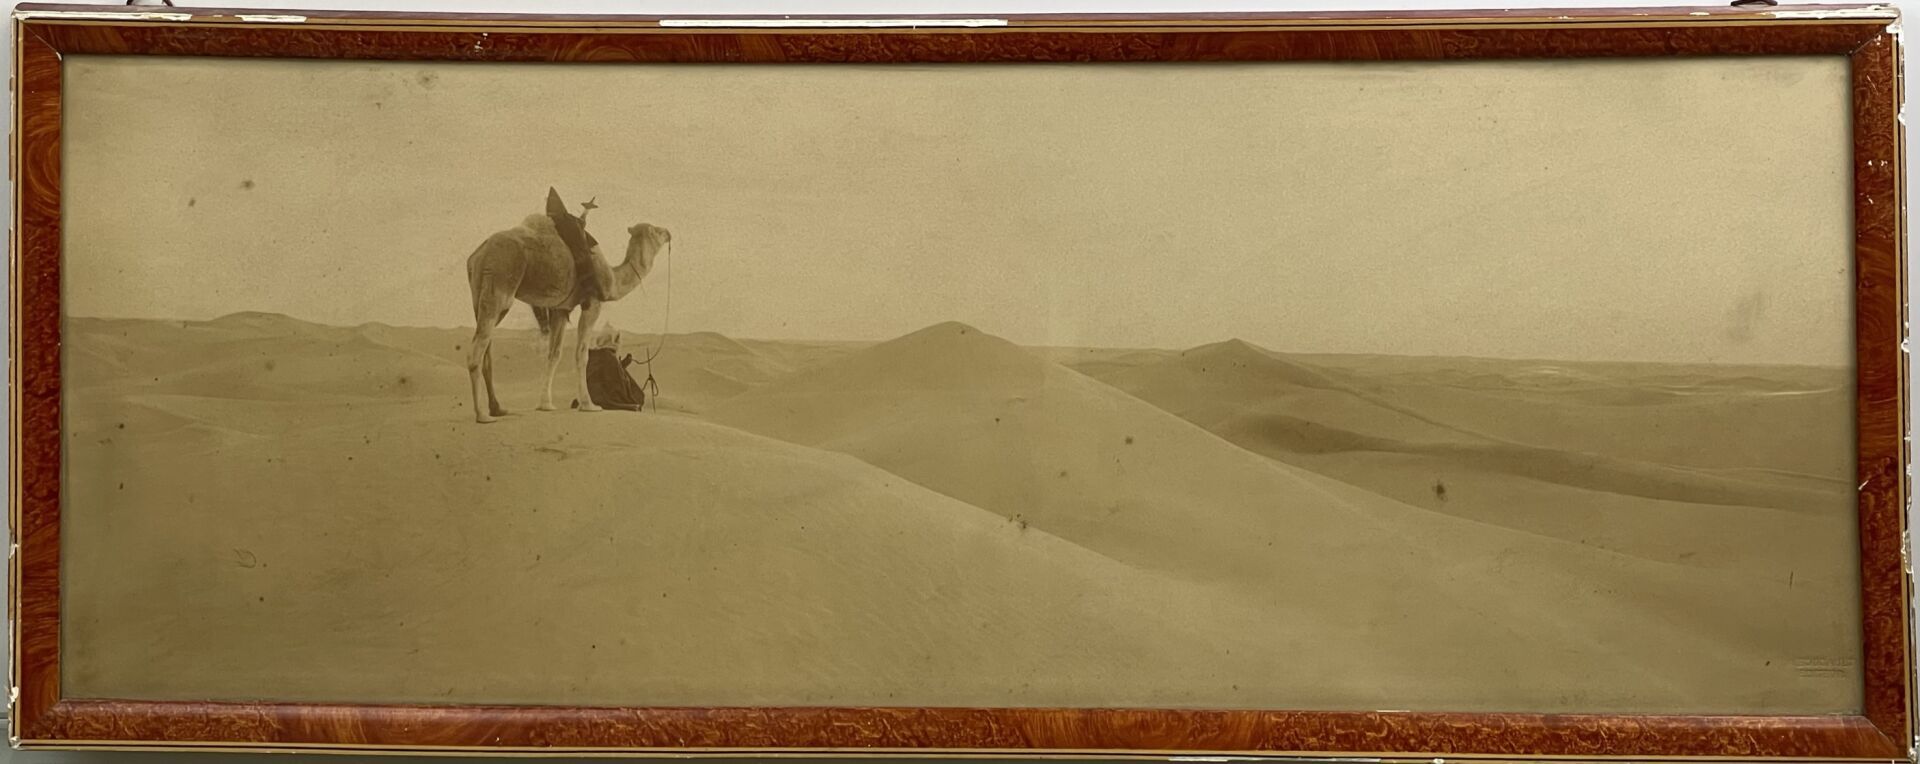 Null BOUGAULT Alexandre (1851-1911)。 
沙漠中的骆驼司机照片
复古银质印刷品，装在纸板上，有框架。 
右下图有A. Boug&hellip;